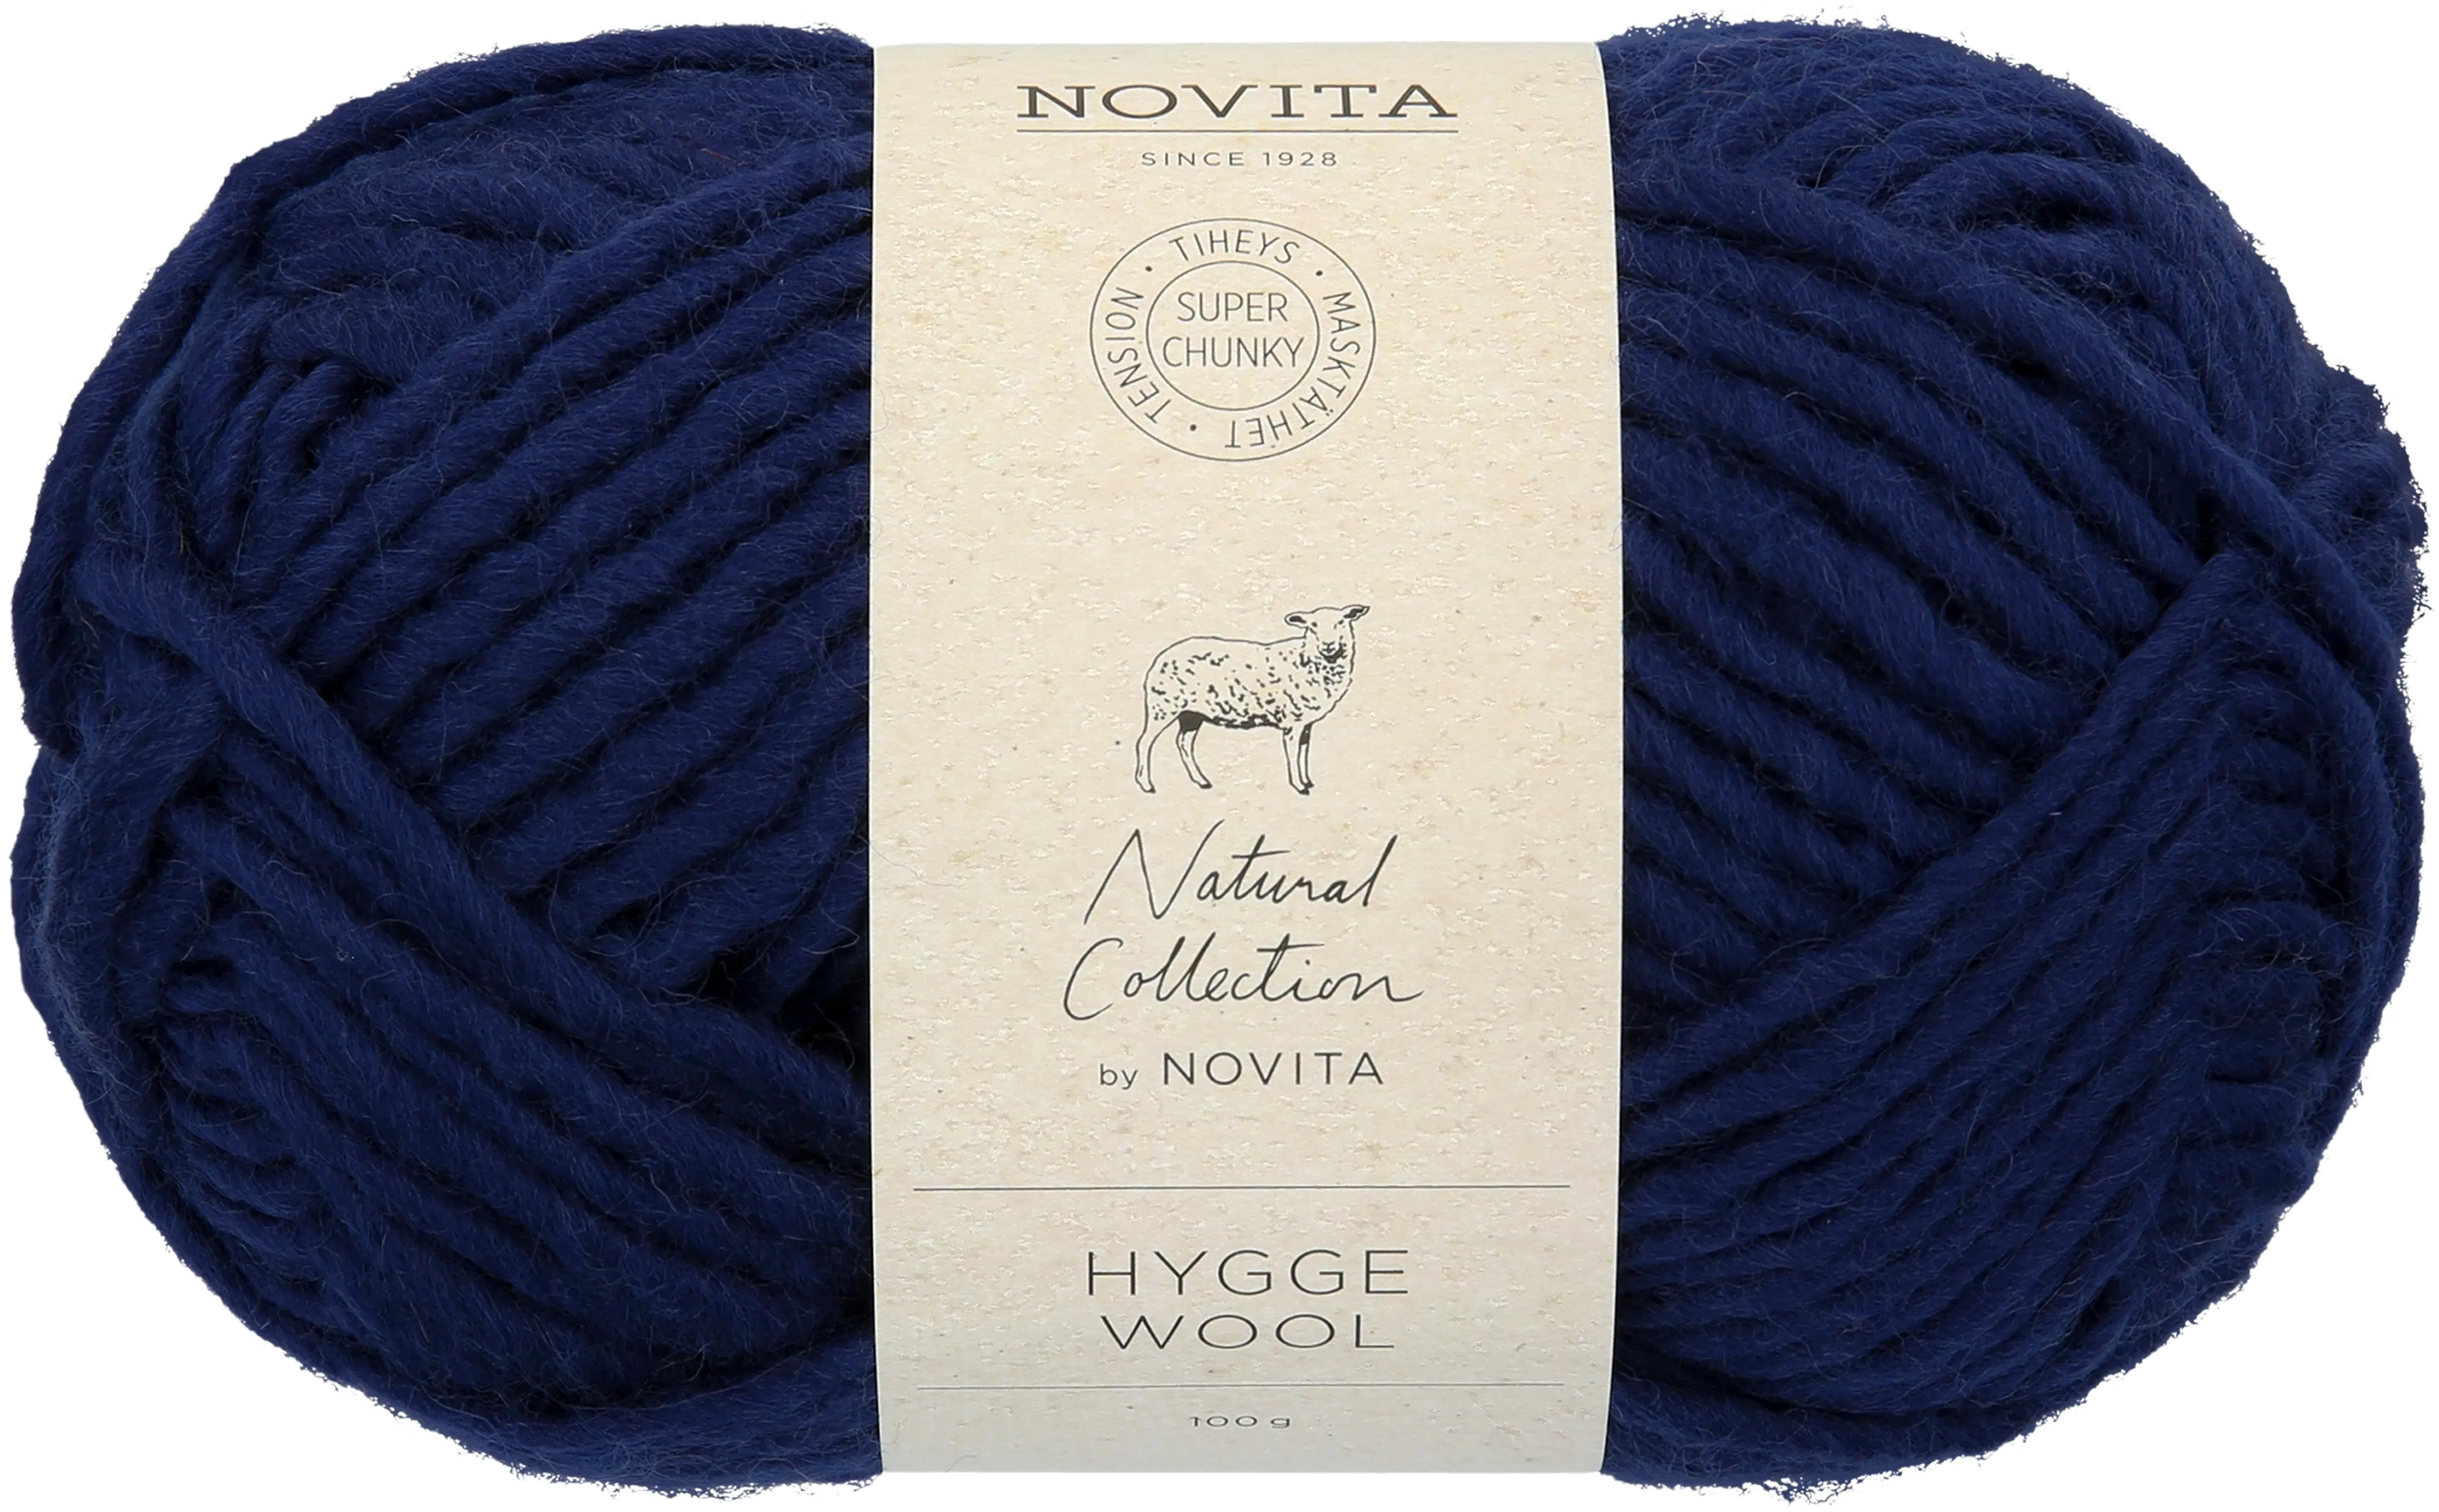 Novita Lanka Hygge Wool 100g 179